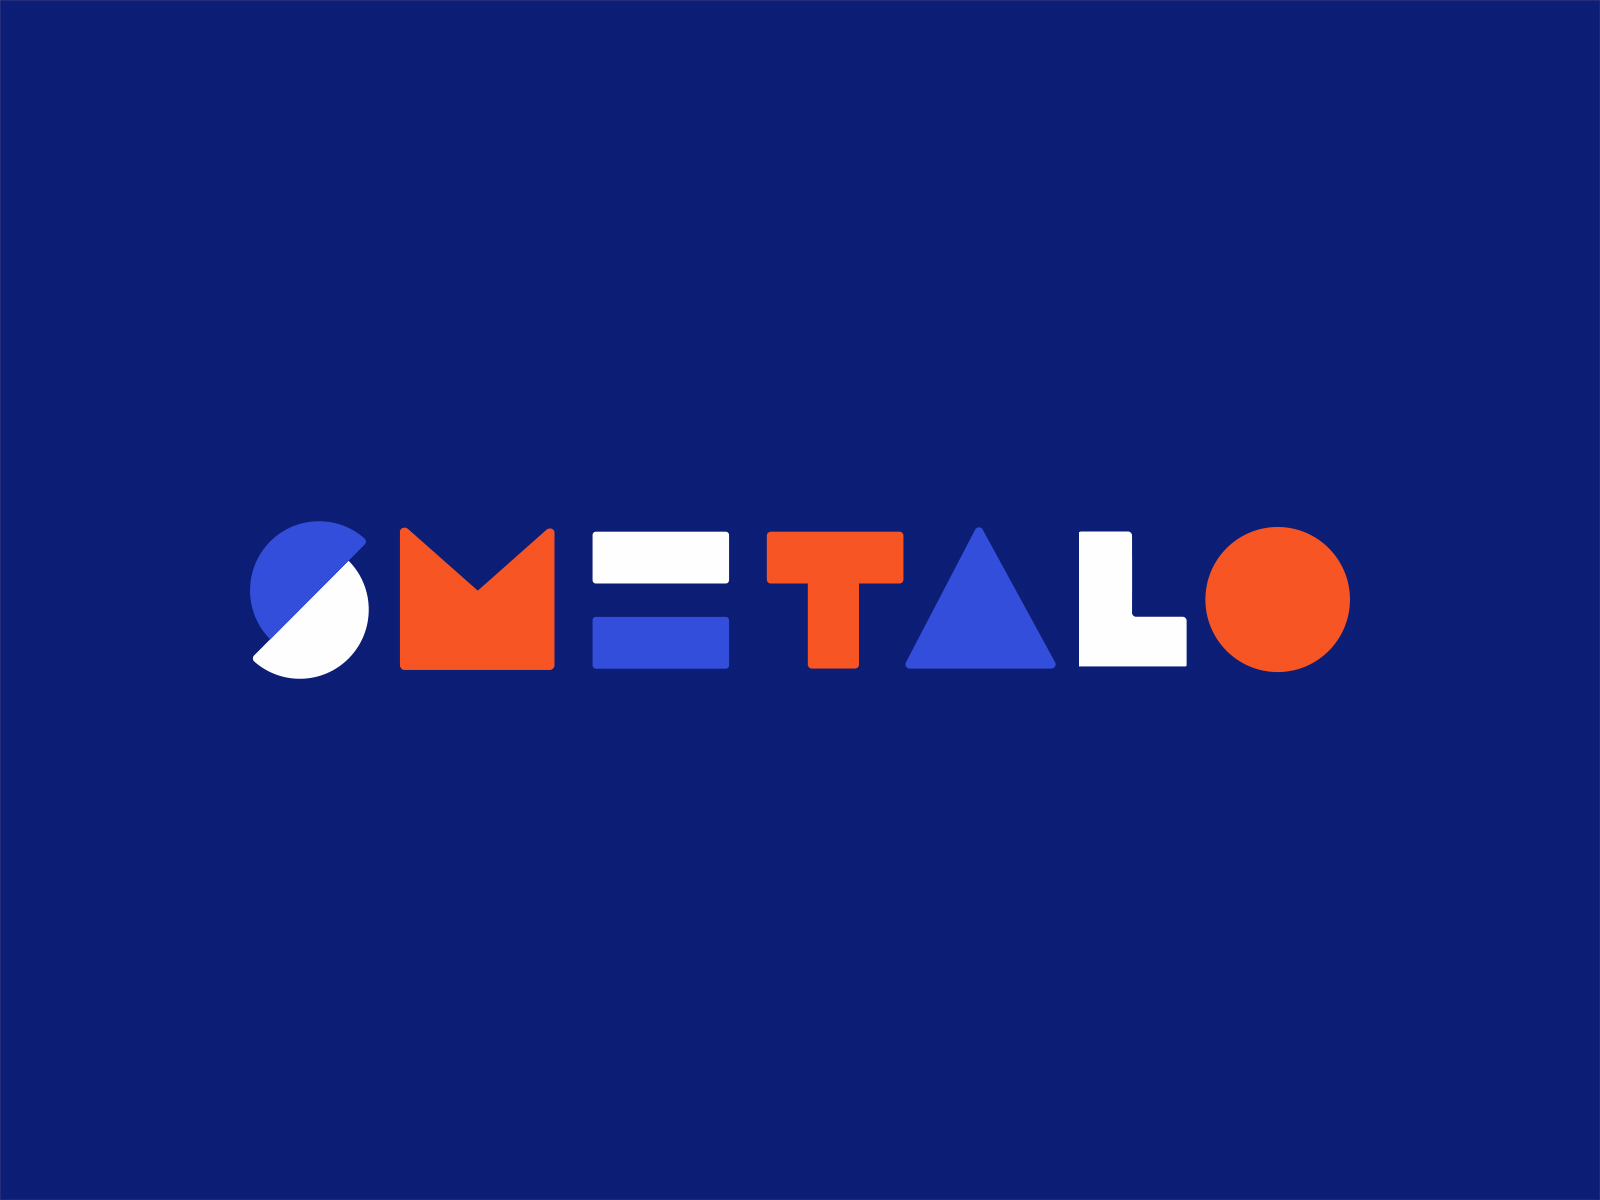 Smetalo Logo 02